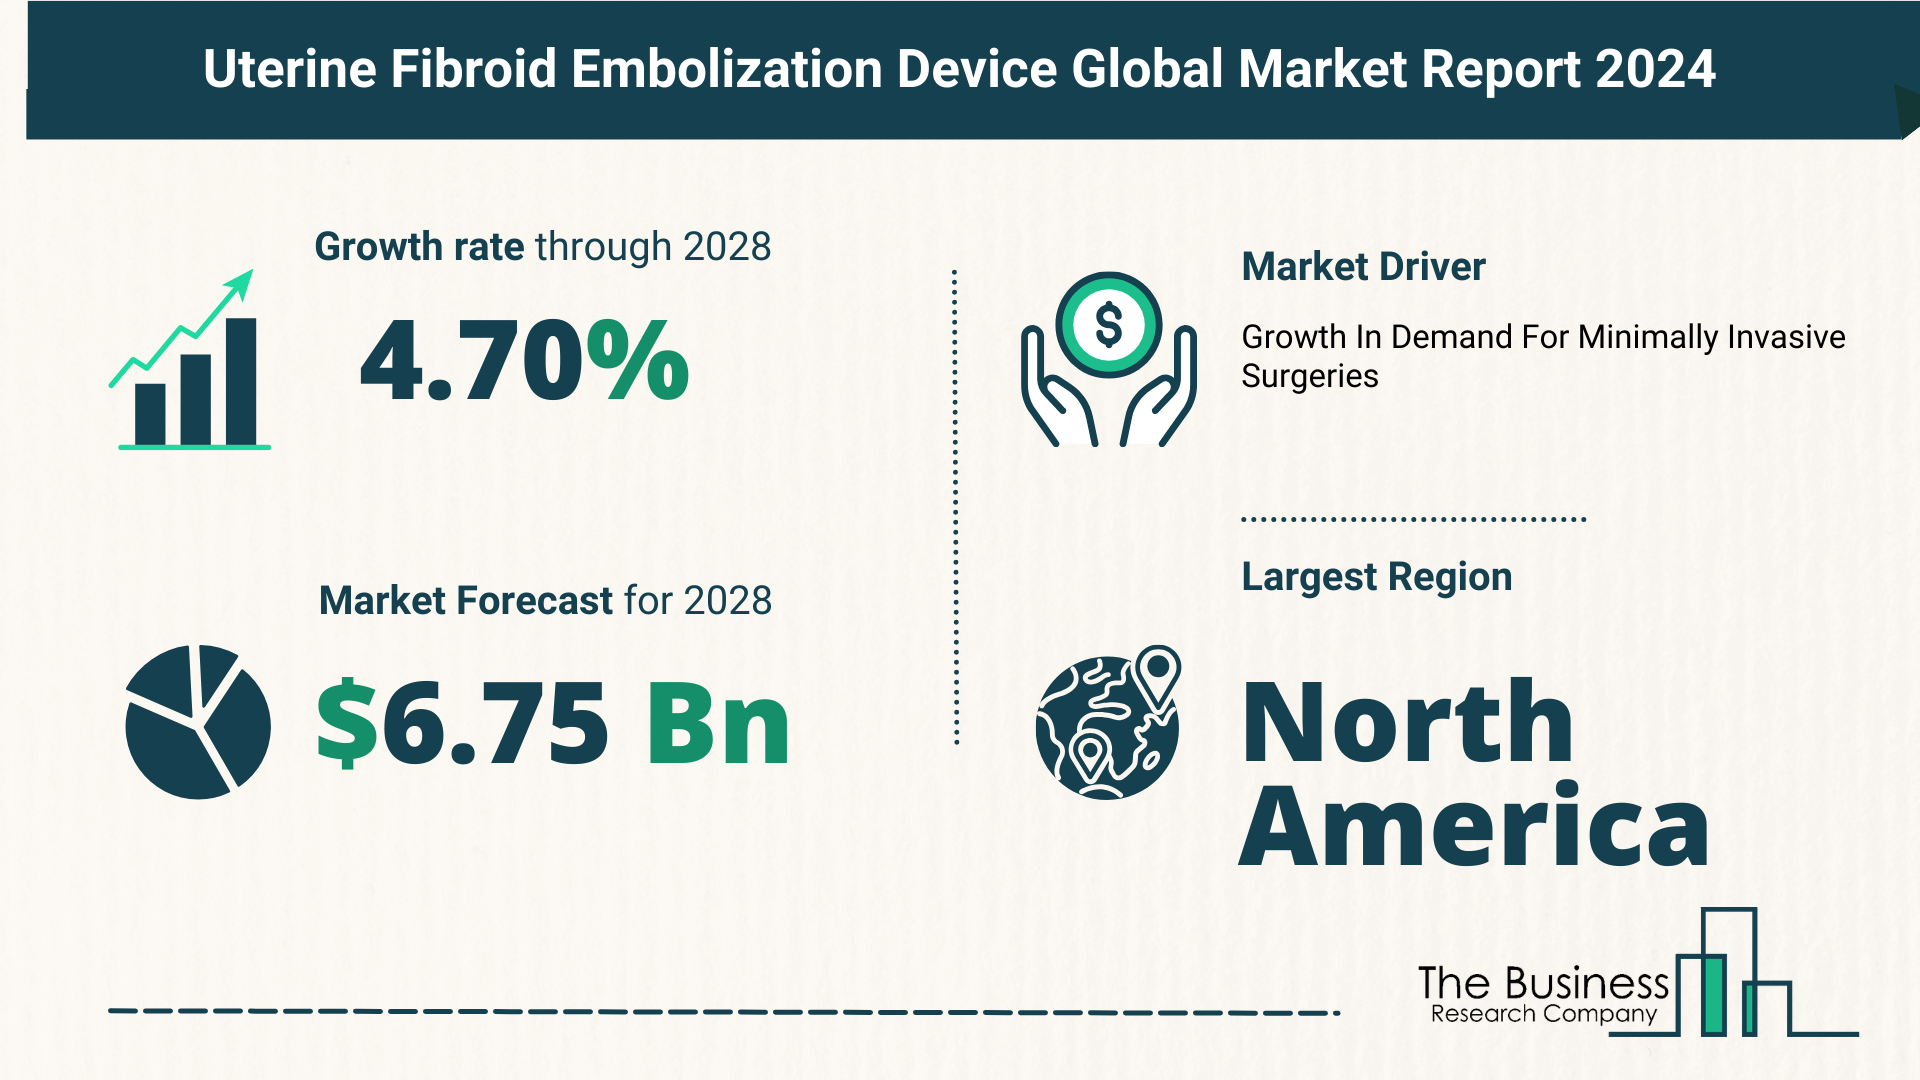 Global Uterine Fibroid Embolization Device Market